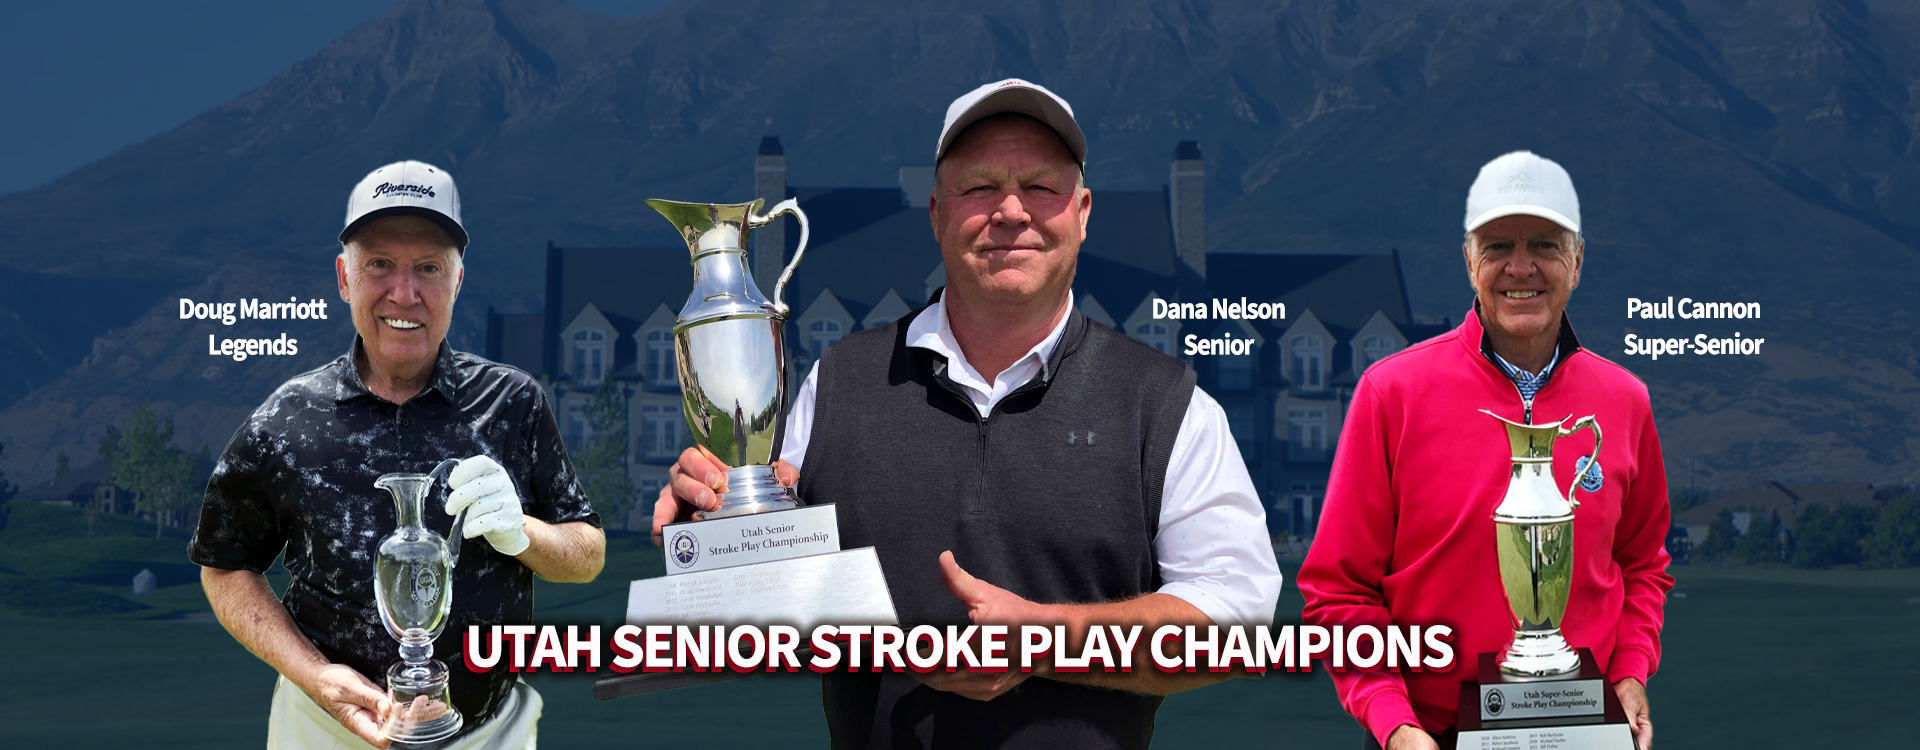 Utah-Senior-Stroke-Play-Champions